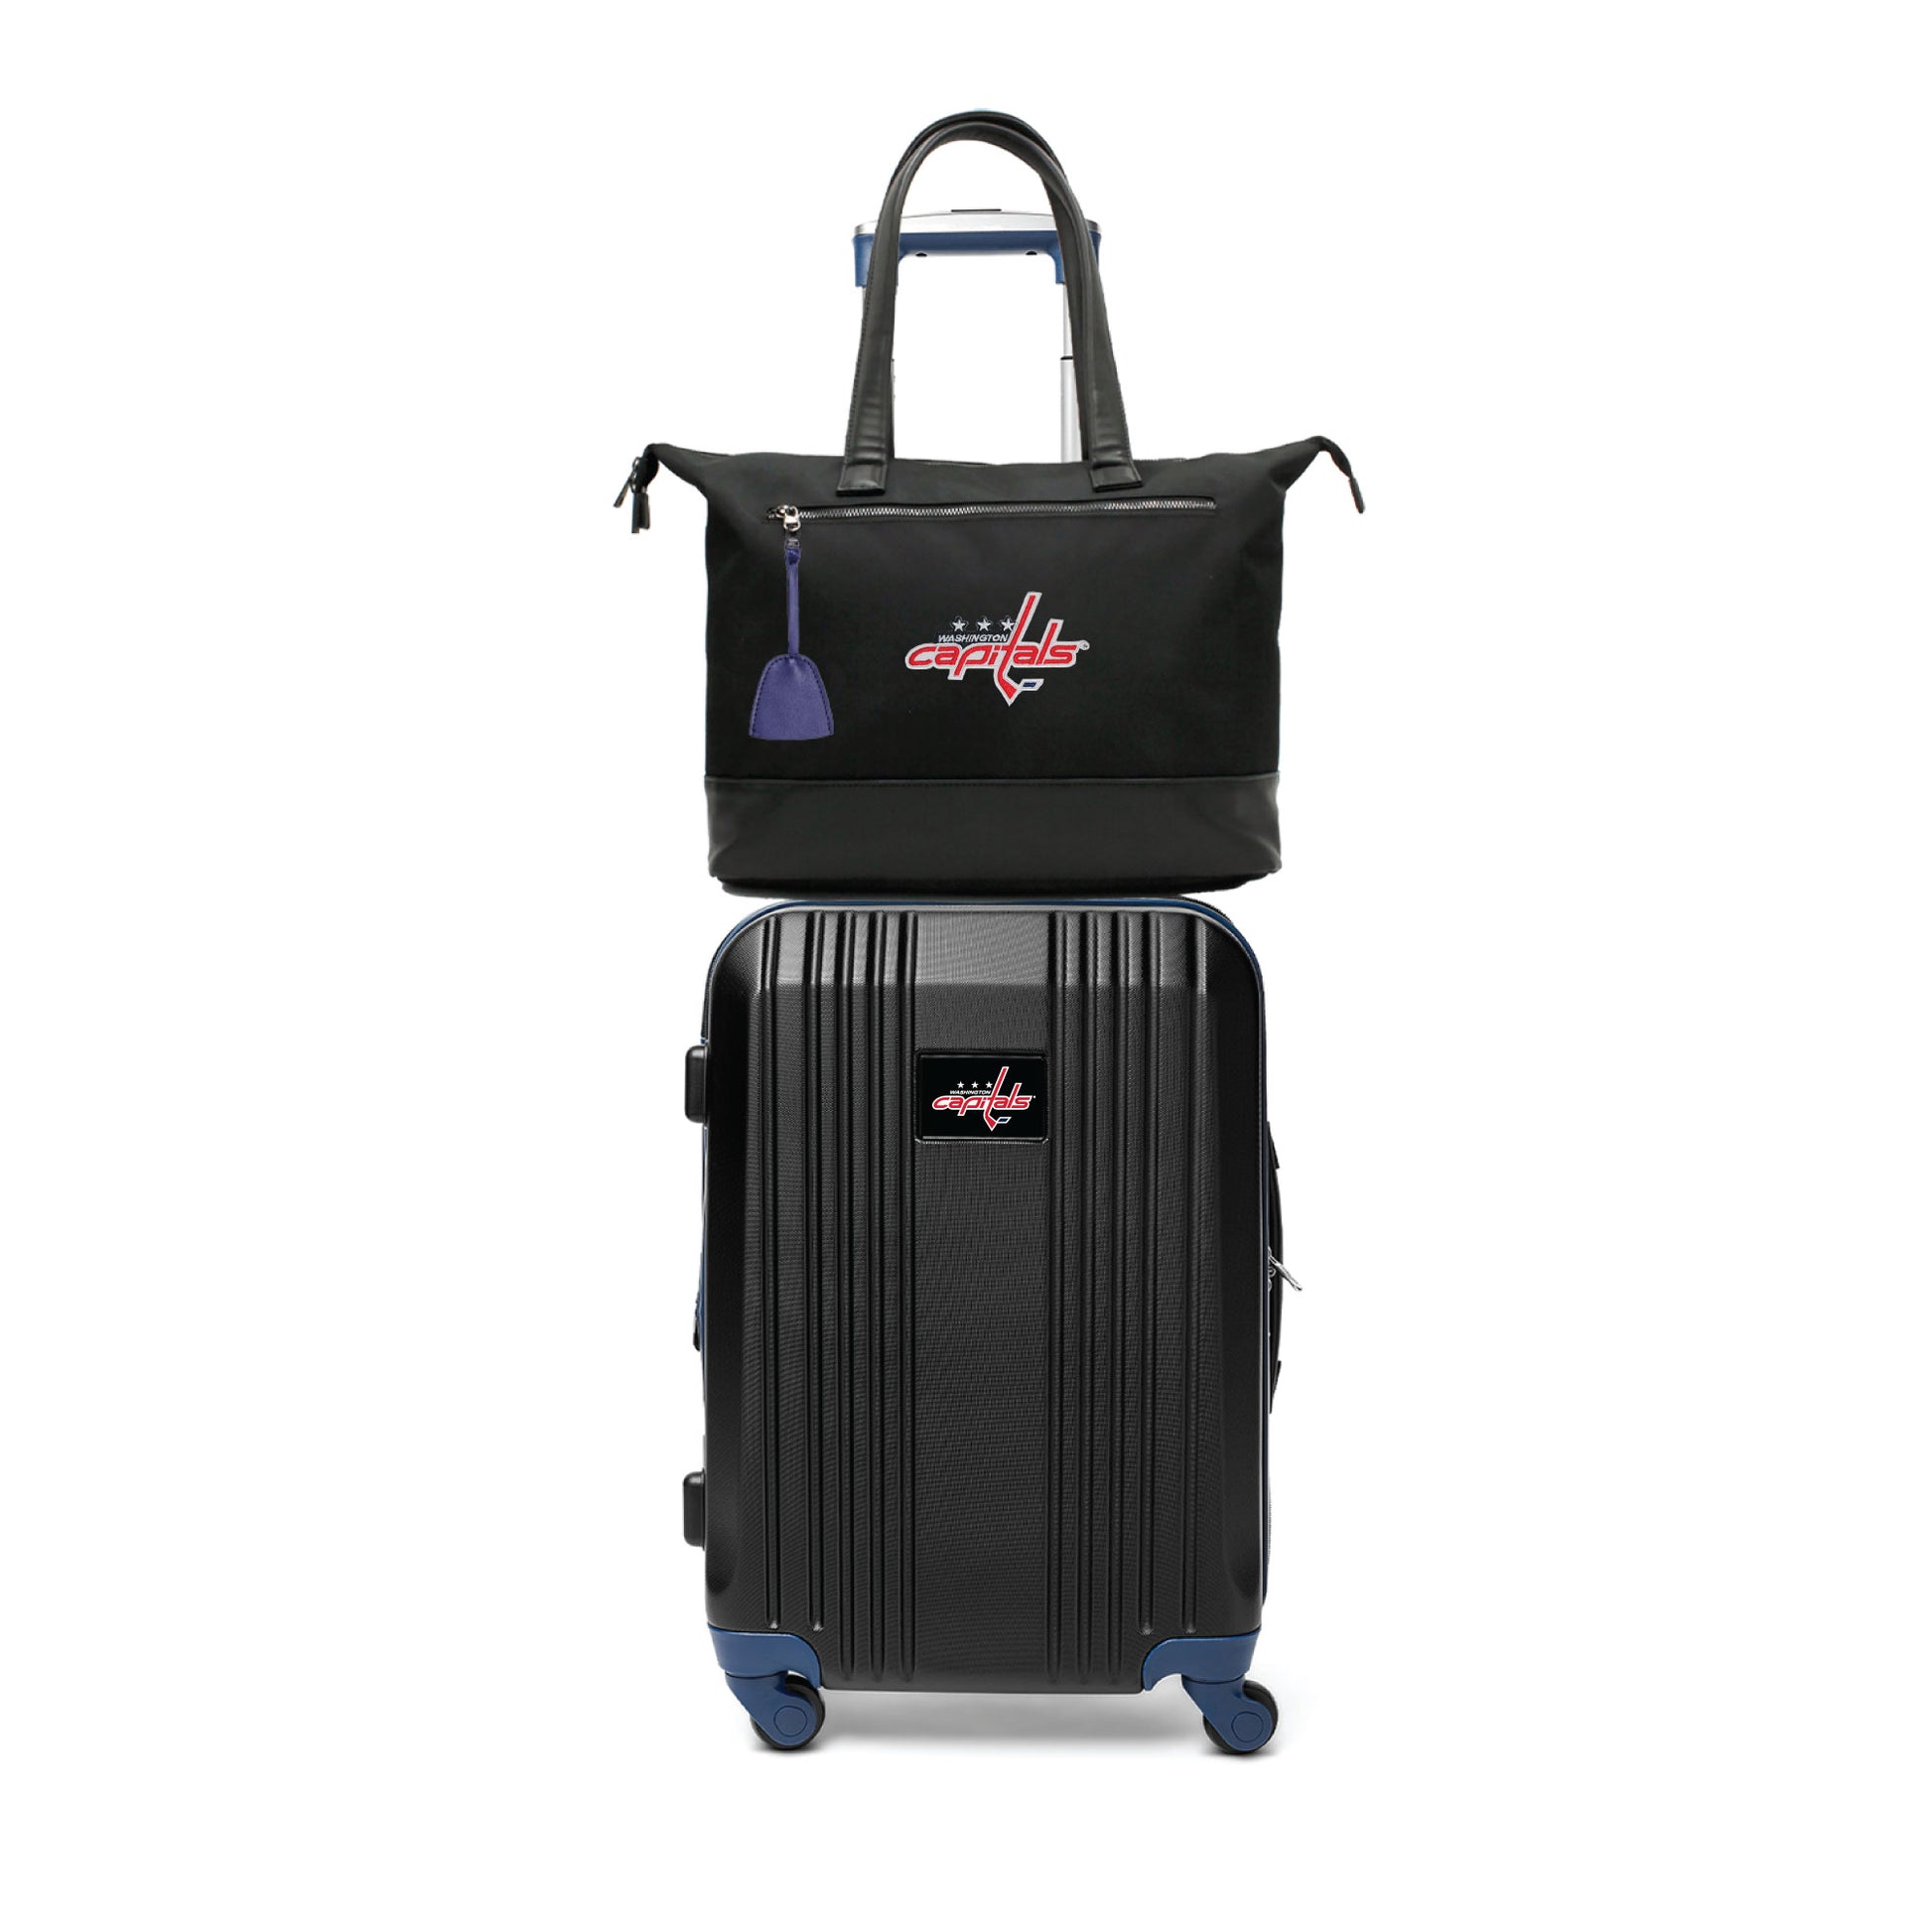 Washington Capitals Premium Laptop Tote Bag and Luggage Set